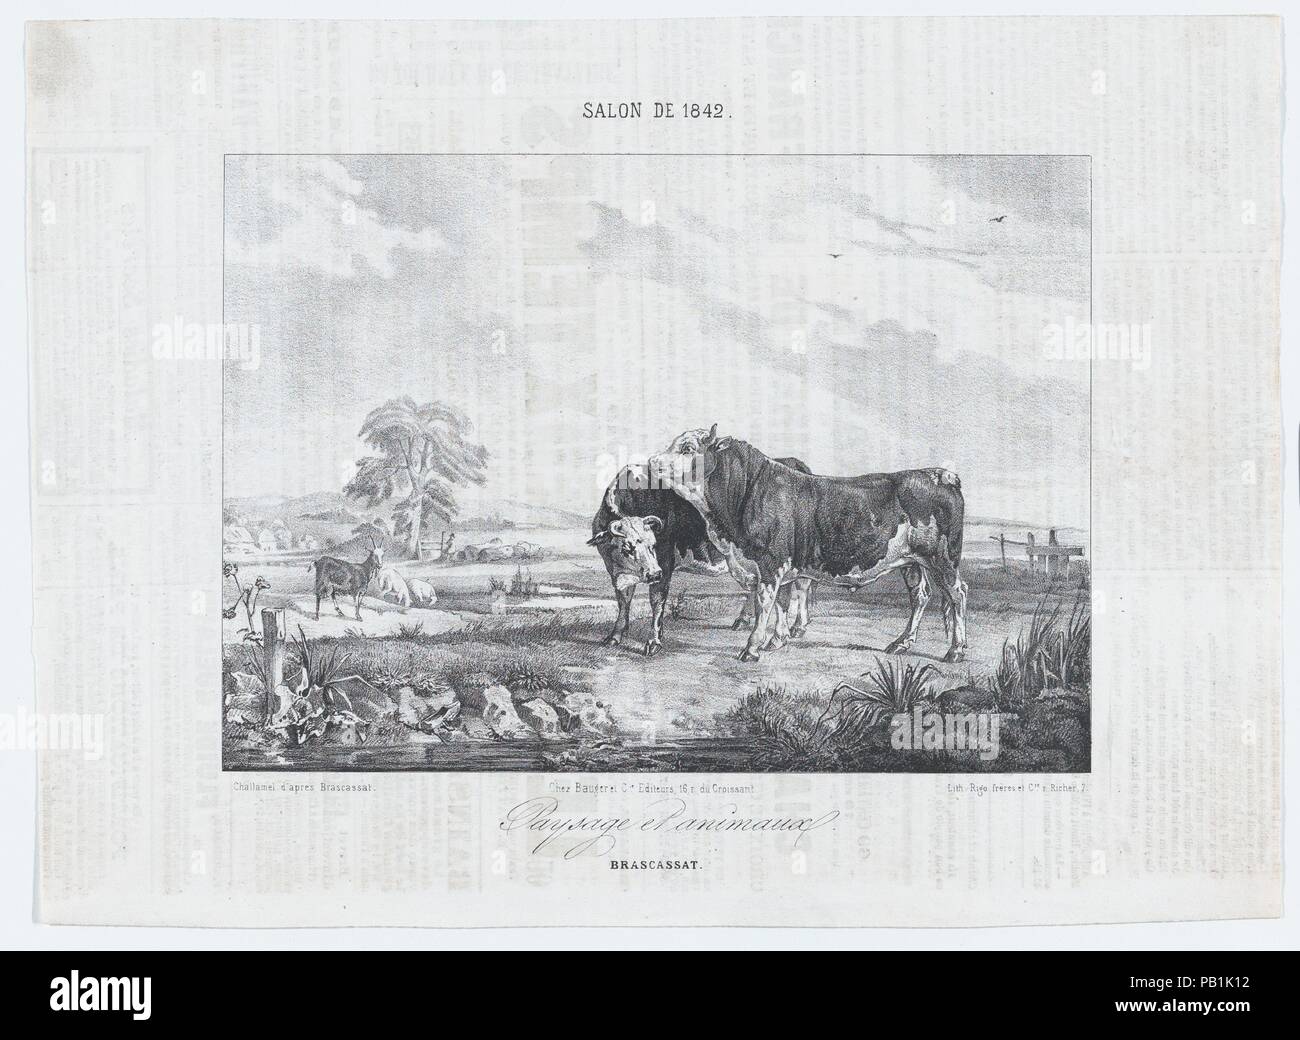 Salon of 1842:  Landscape with Animals. Artist: Jules-Robert-Pierre-Joseph Challamel (French, 1813-1863 (?)); After Jacques-Raymond Brascassat (French, 1804-1867). Dimensions: Sheet: 8 3/8 x 11 9/16 in. (21.3 x 29.3 cm)  Image: 5 3/4 x 8 1/8 in. (14.6 x 20.6 cm). Printer: J. Rigo, Lebref et Cie. Date: 1842. Museum: Metropolitan Museum of Art, New York, USA. Stock Photo